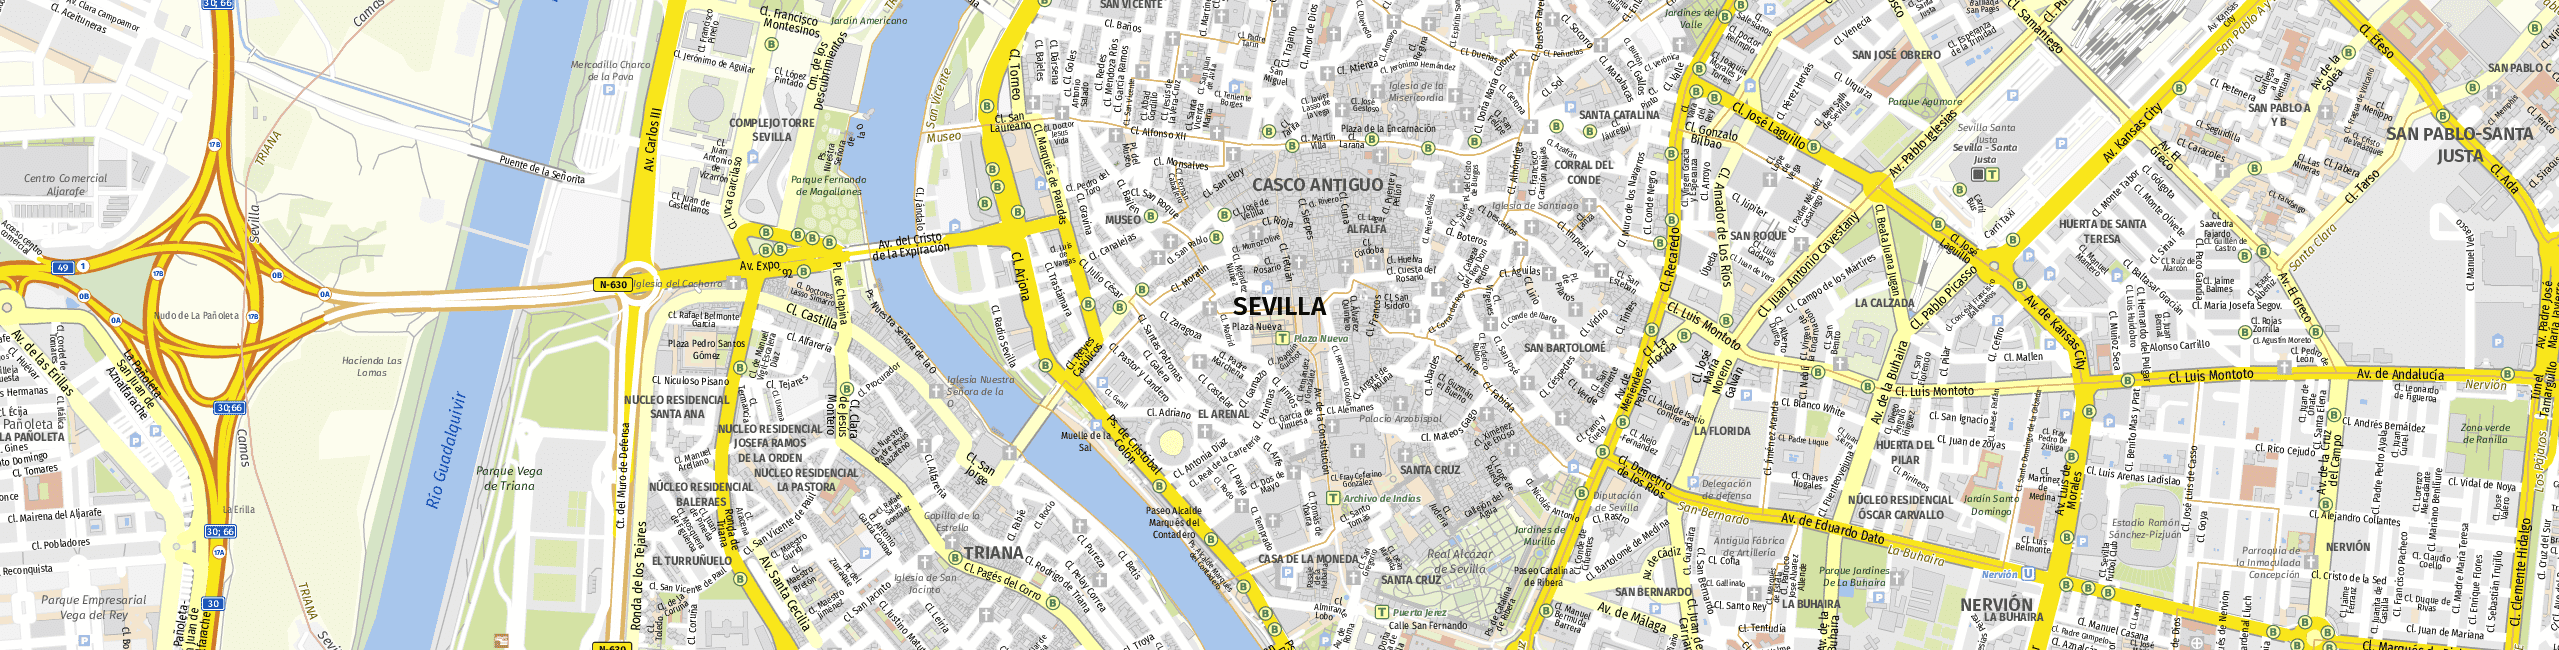 Stadtplan Seville zum Downloaden.